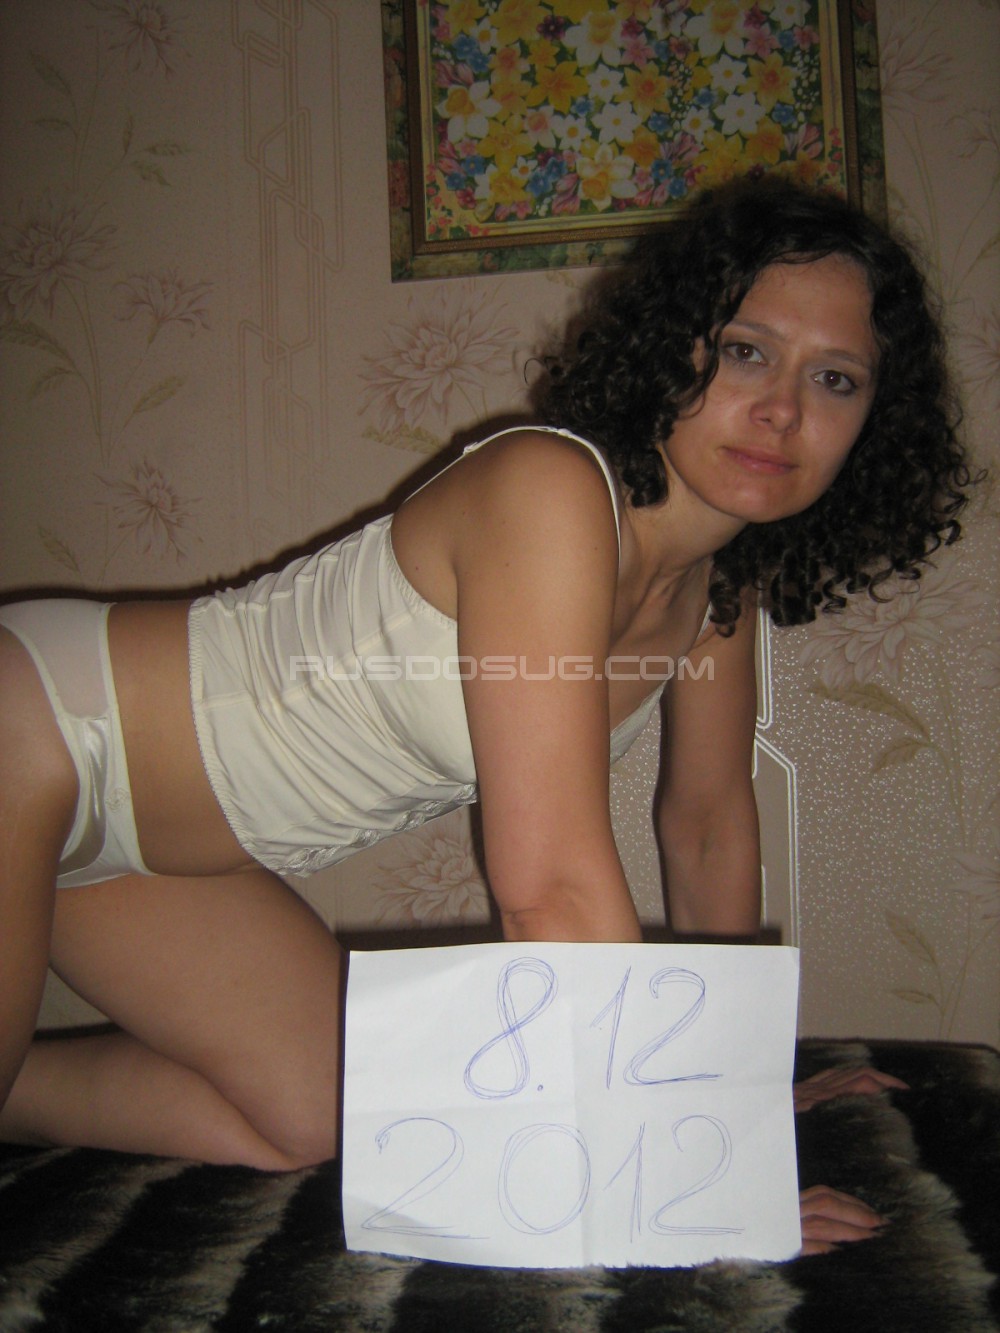 It's All About проститутки в Челябинске